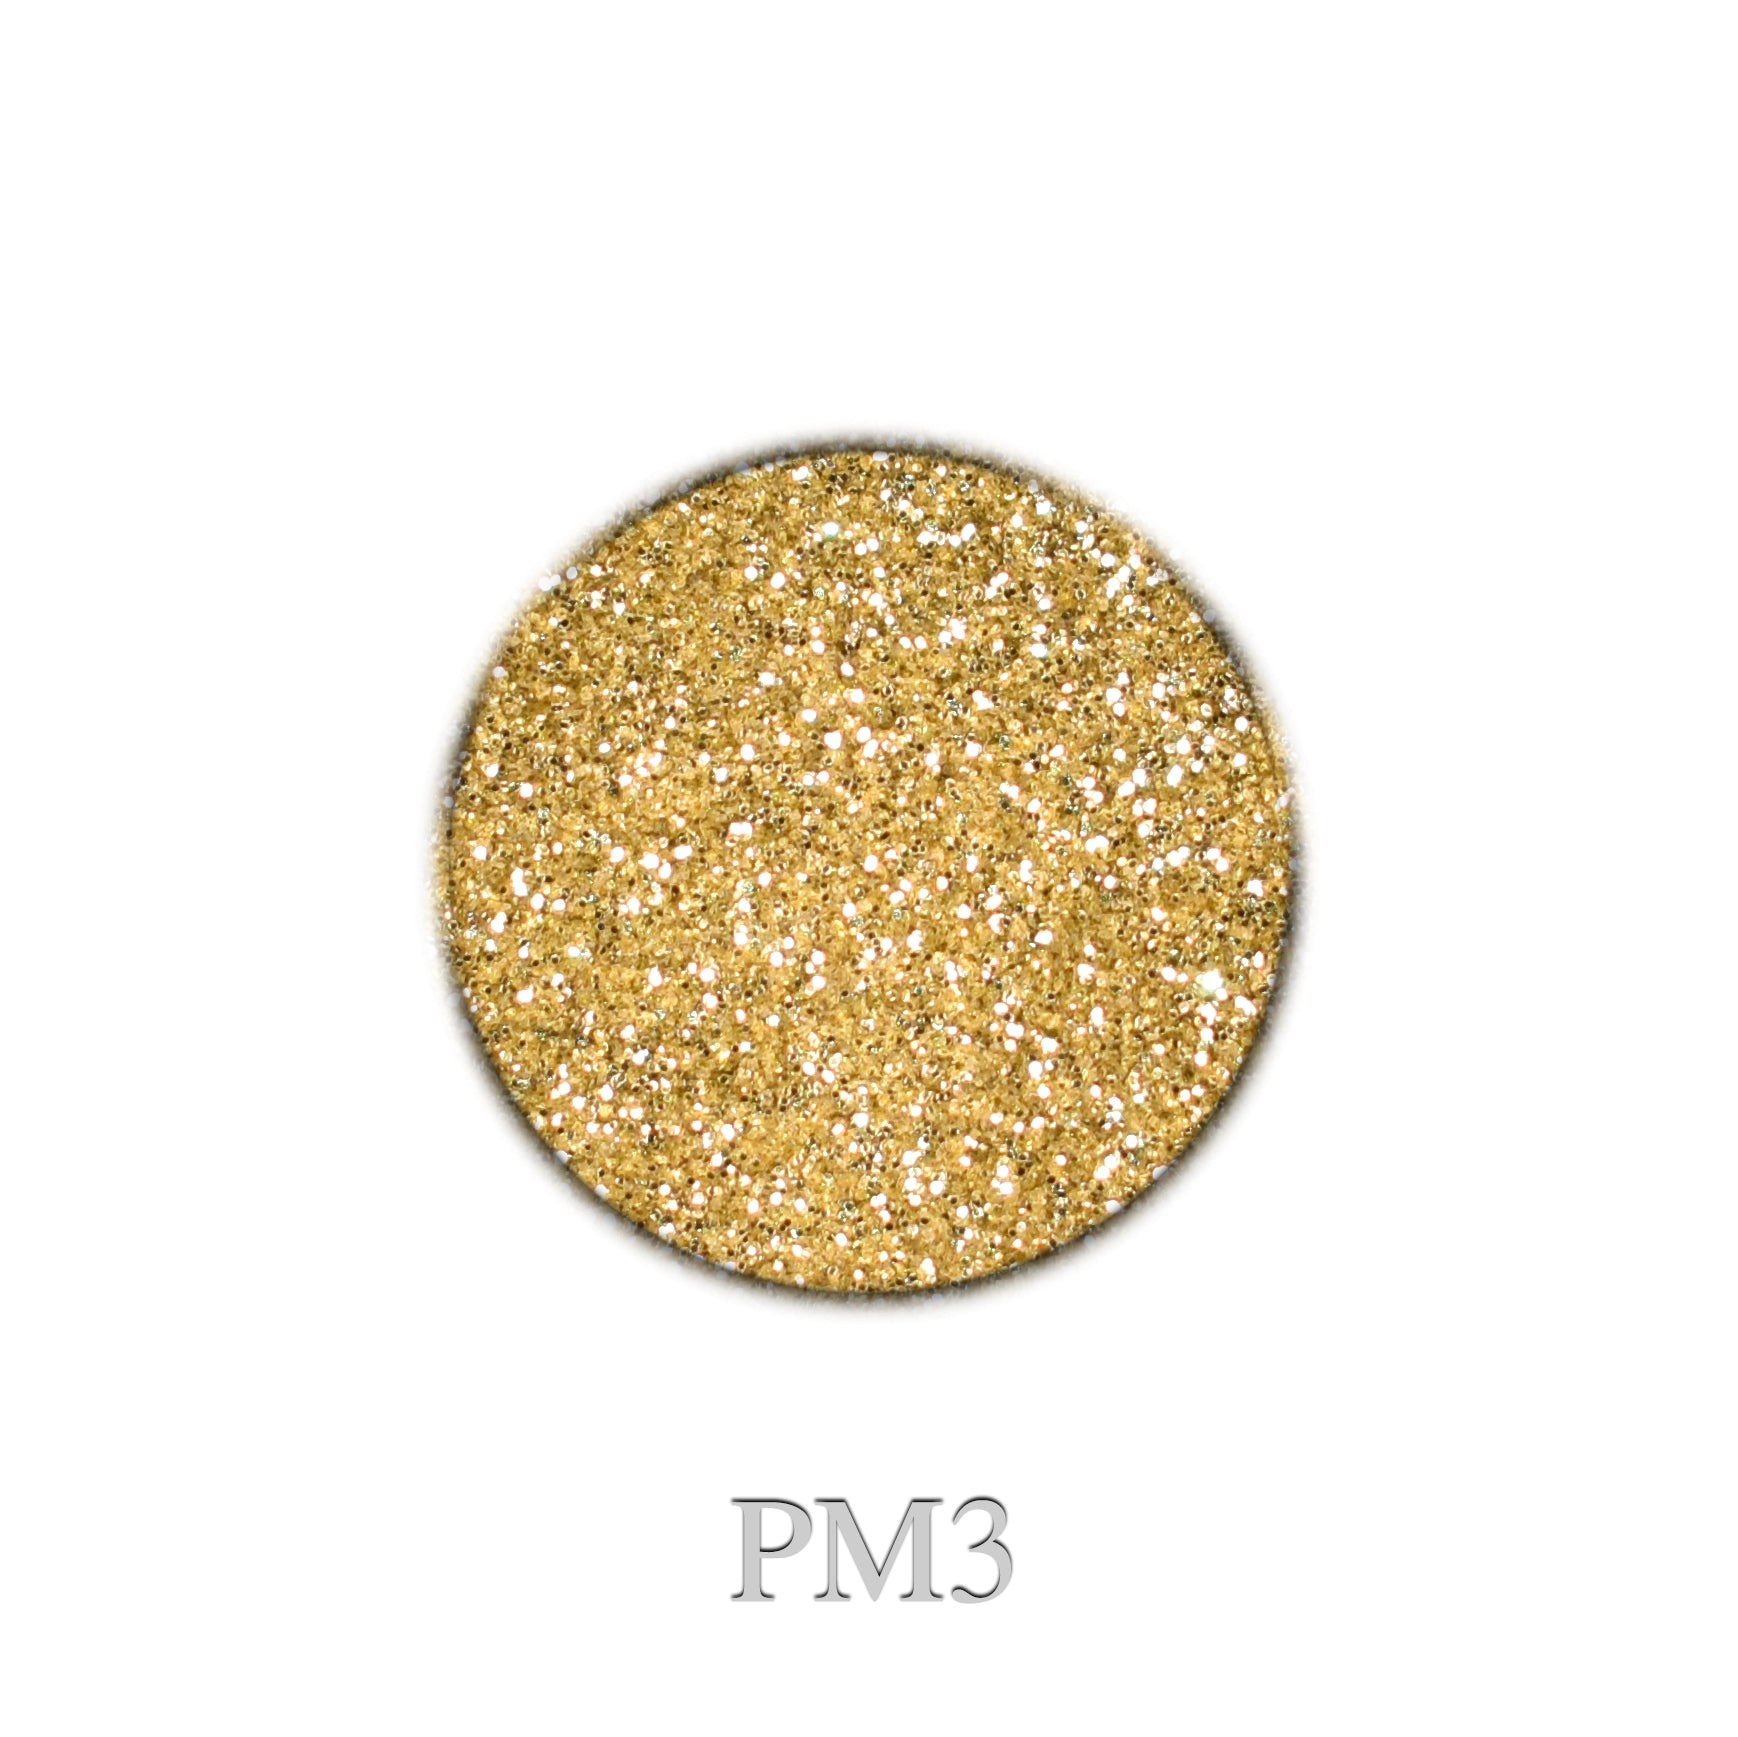 Precious metal glitter PM3